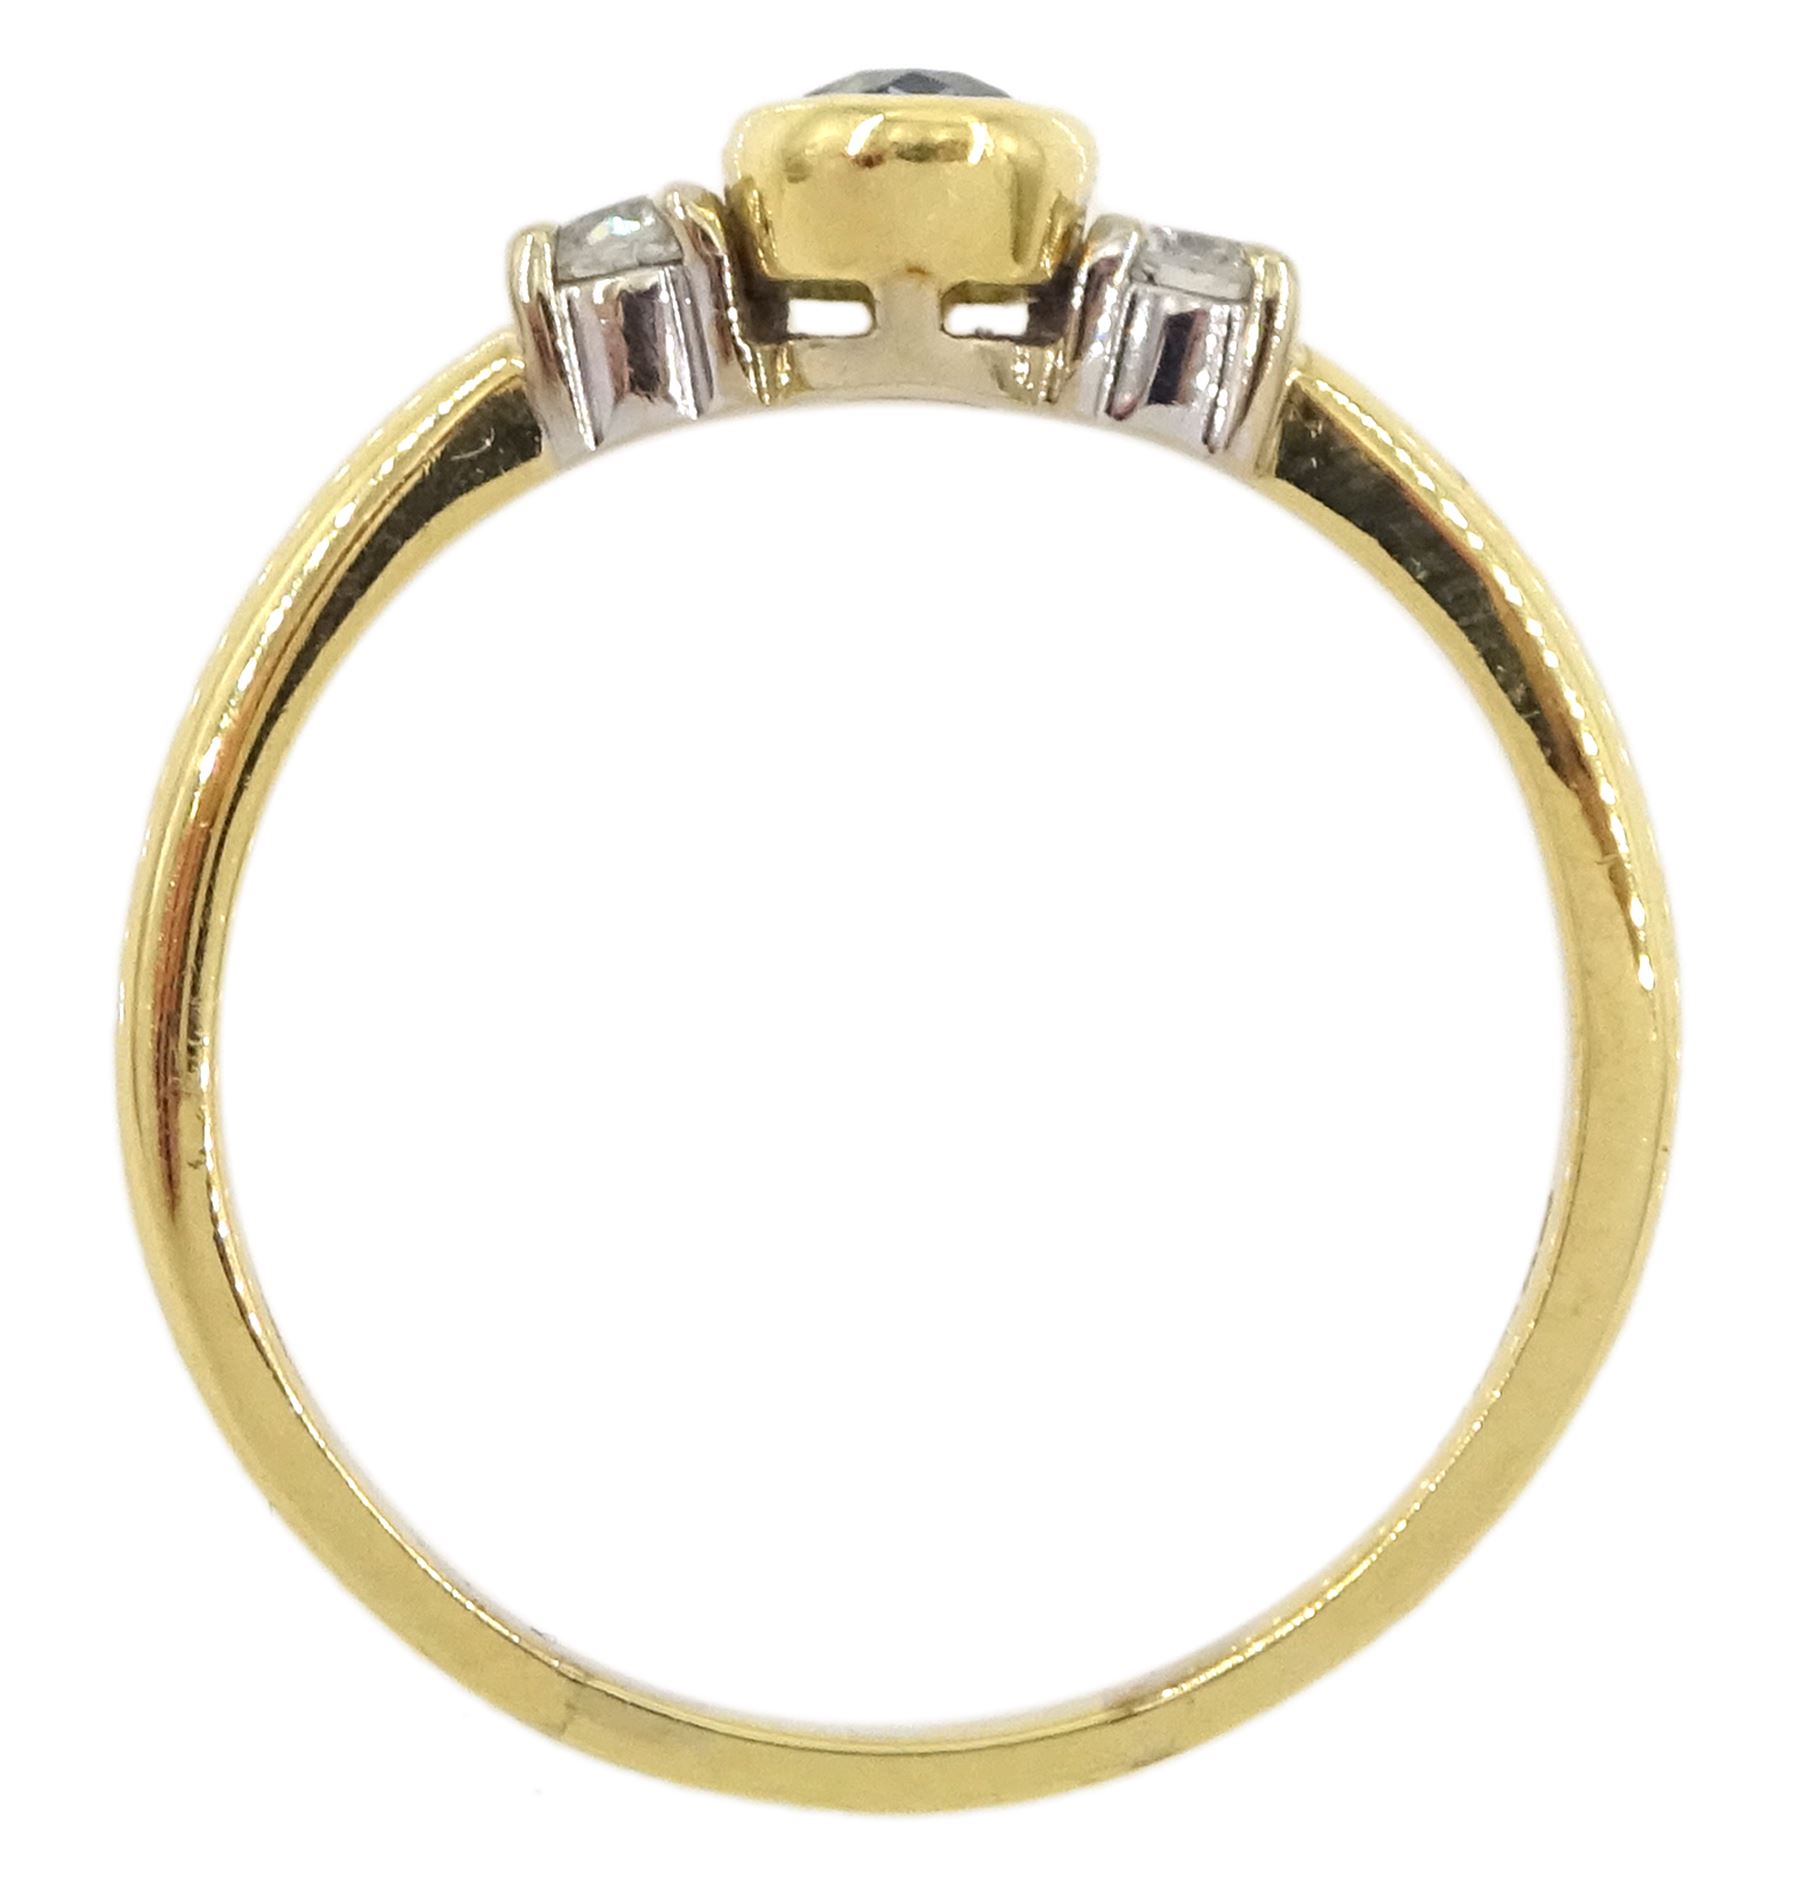 18ct gold three stone oval aquamarine and round brilliant cut diamond ring - Image 4 of 4